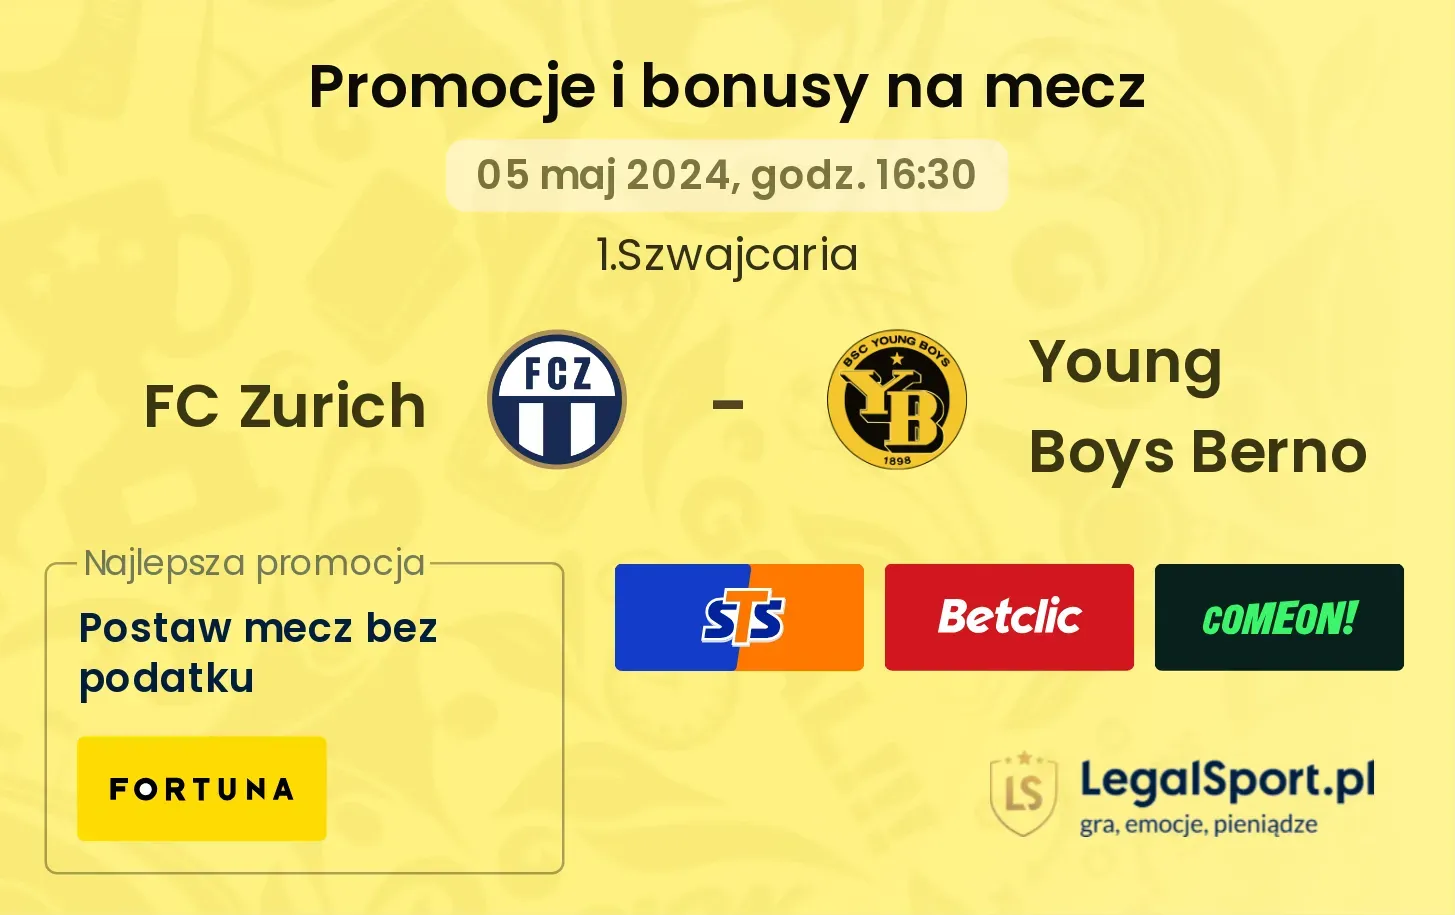 FC Zurich - Young Boys Berno promocje bonusy na mecz